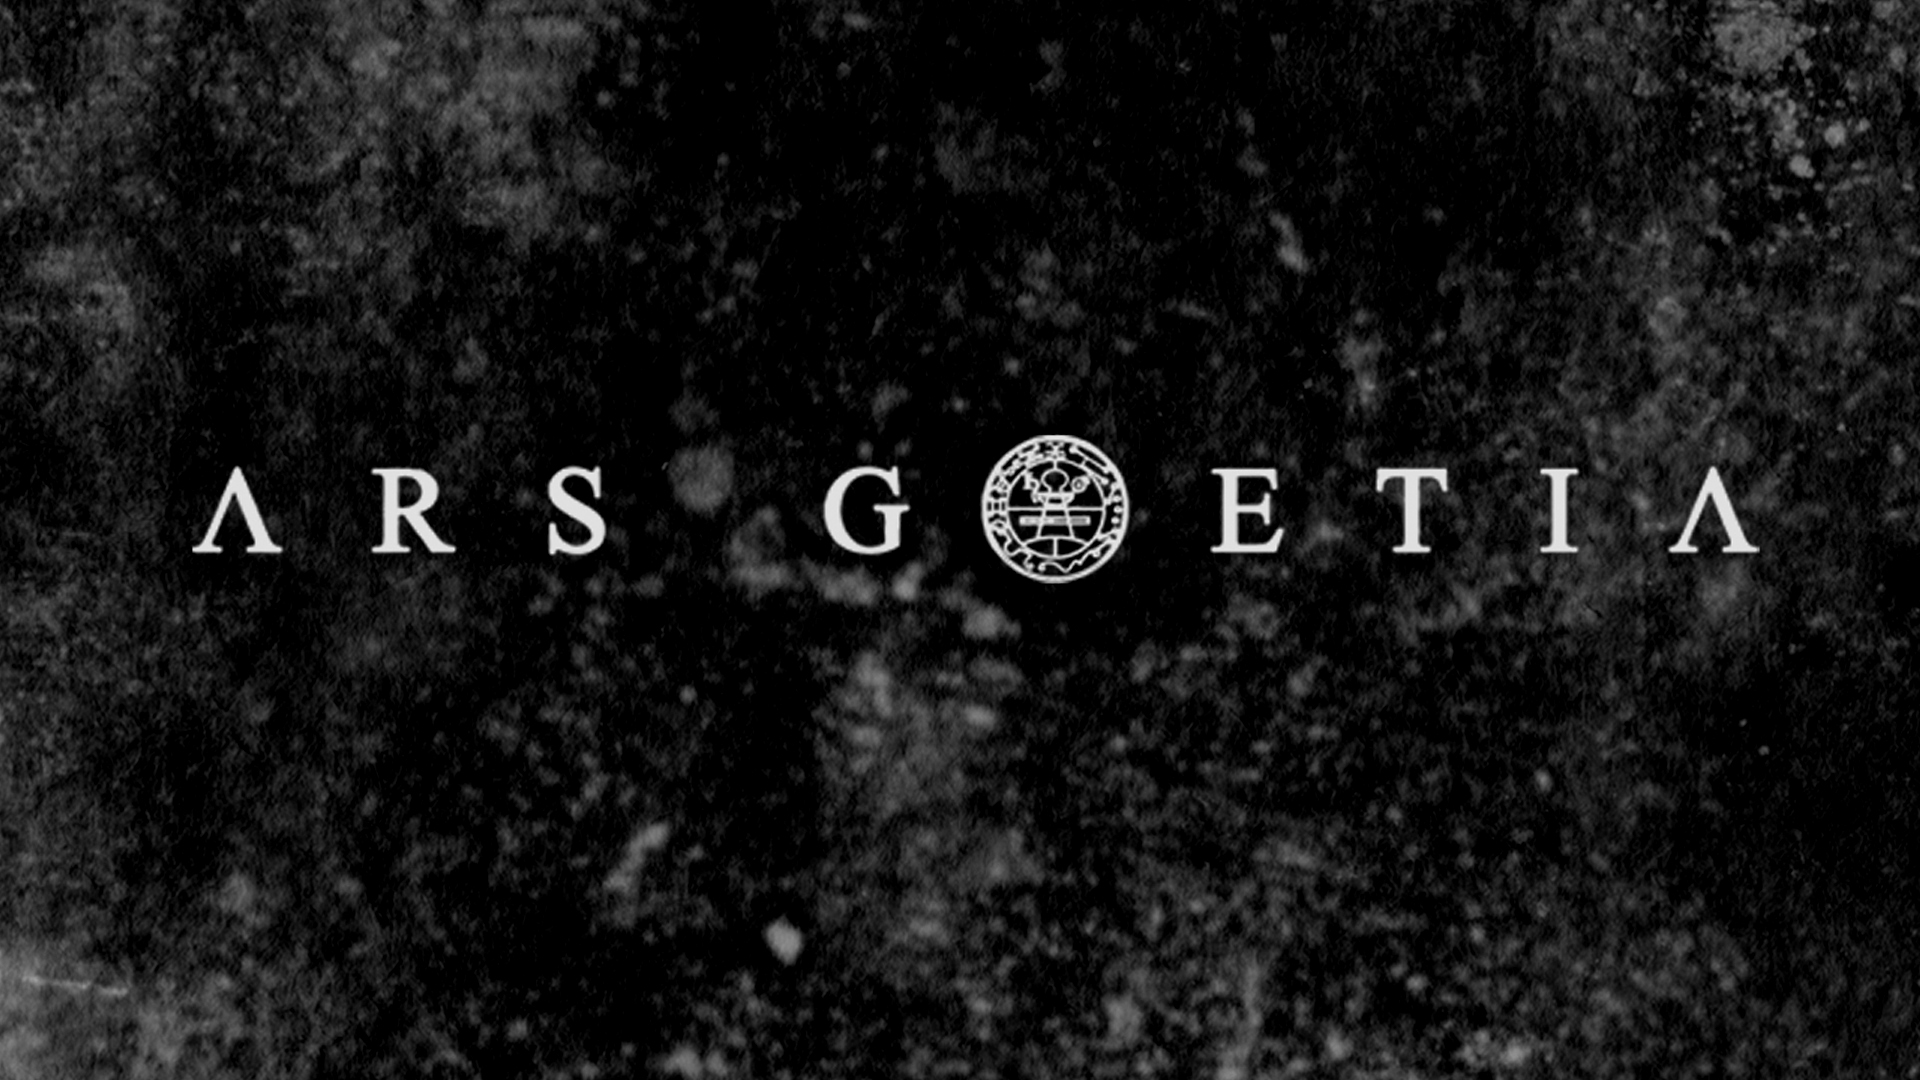 INFERNAL ANGELS present “Ars Goetia” album teaser, My Kingdom Music